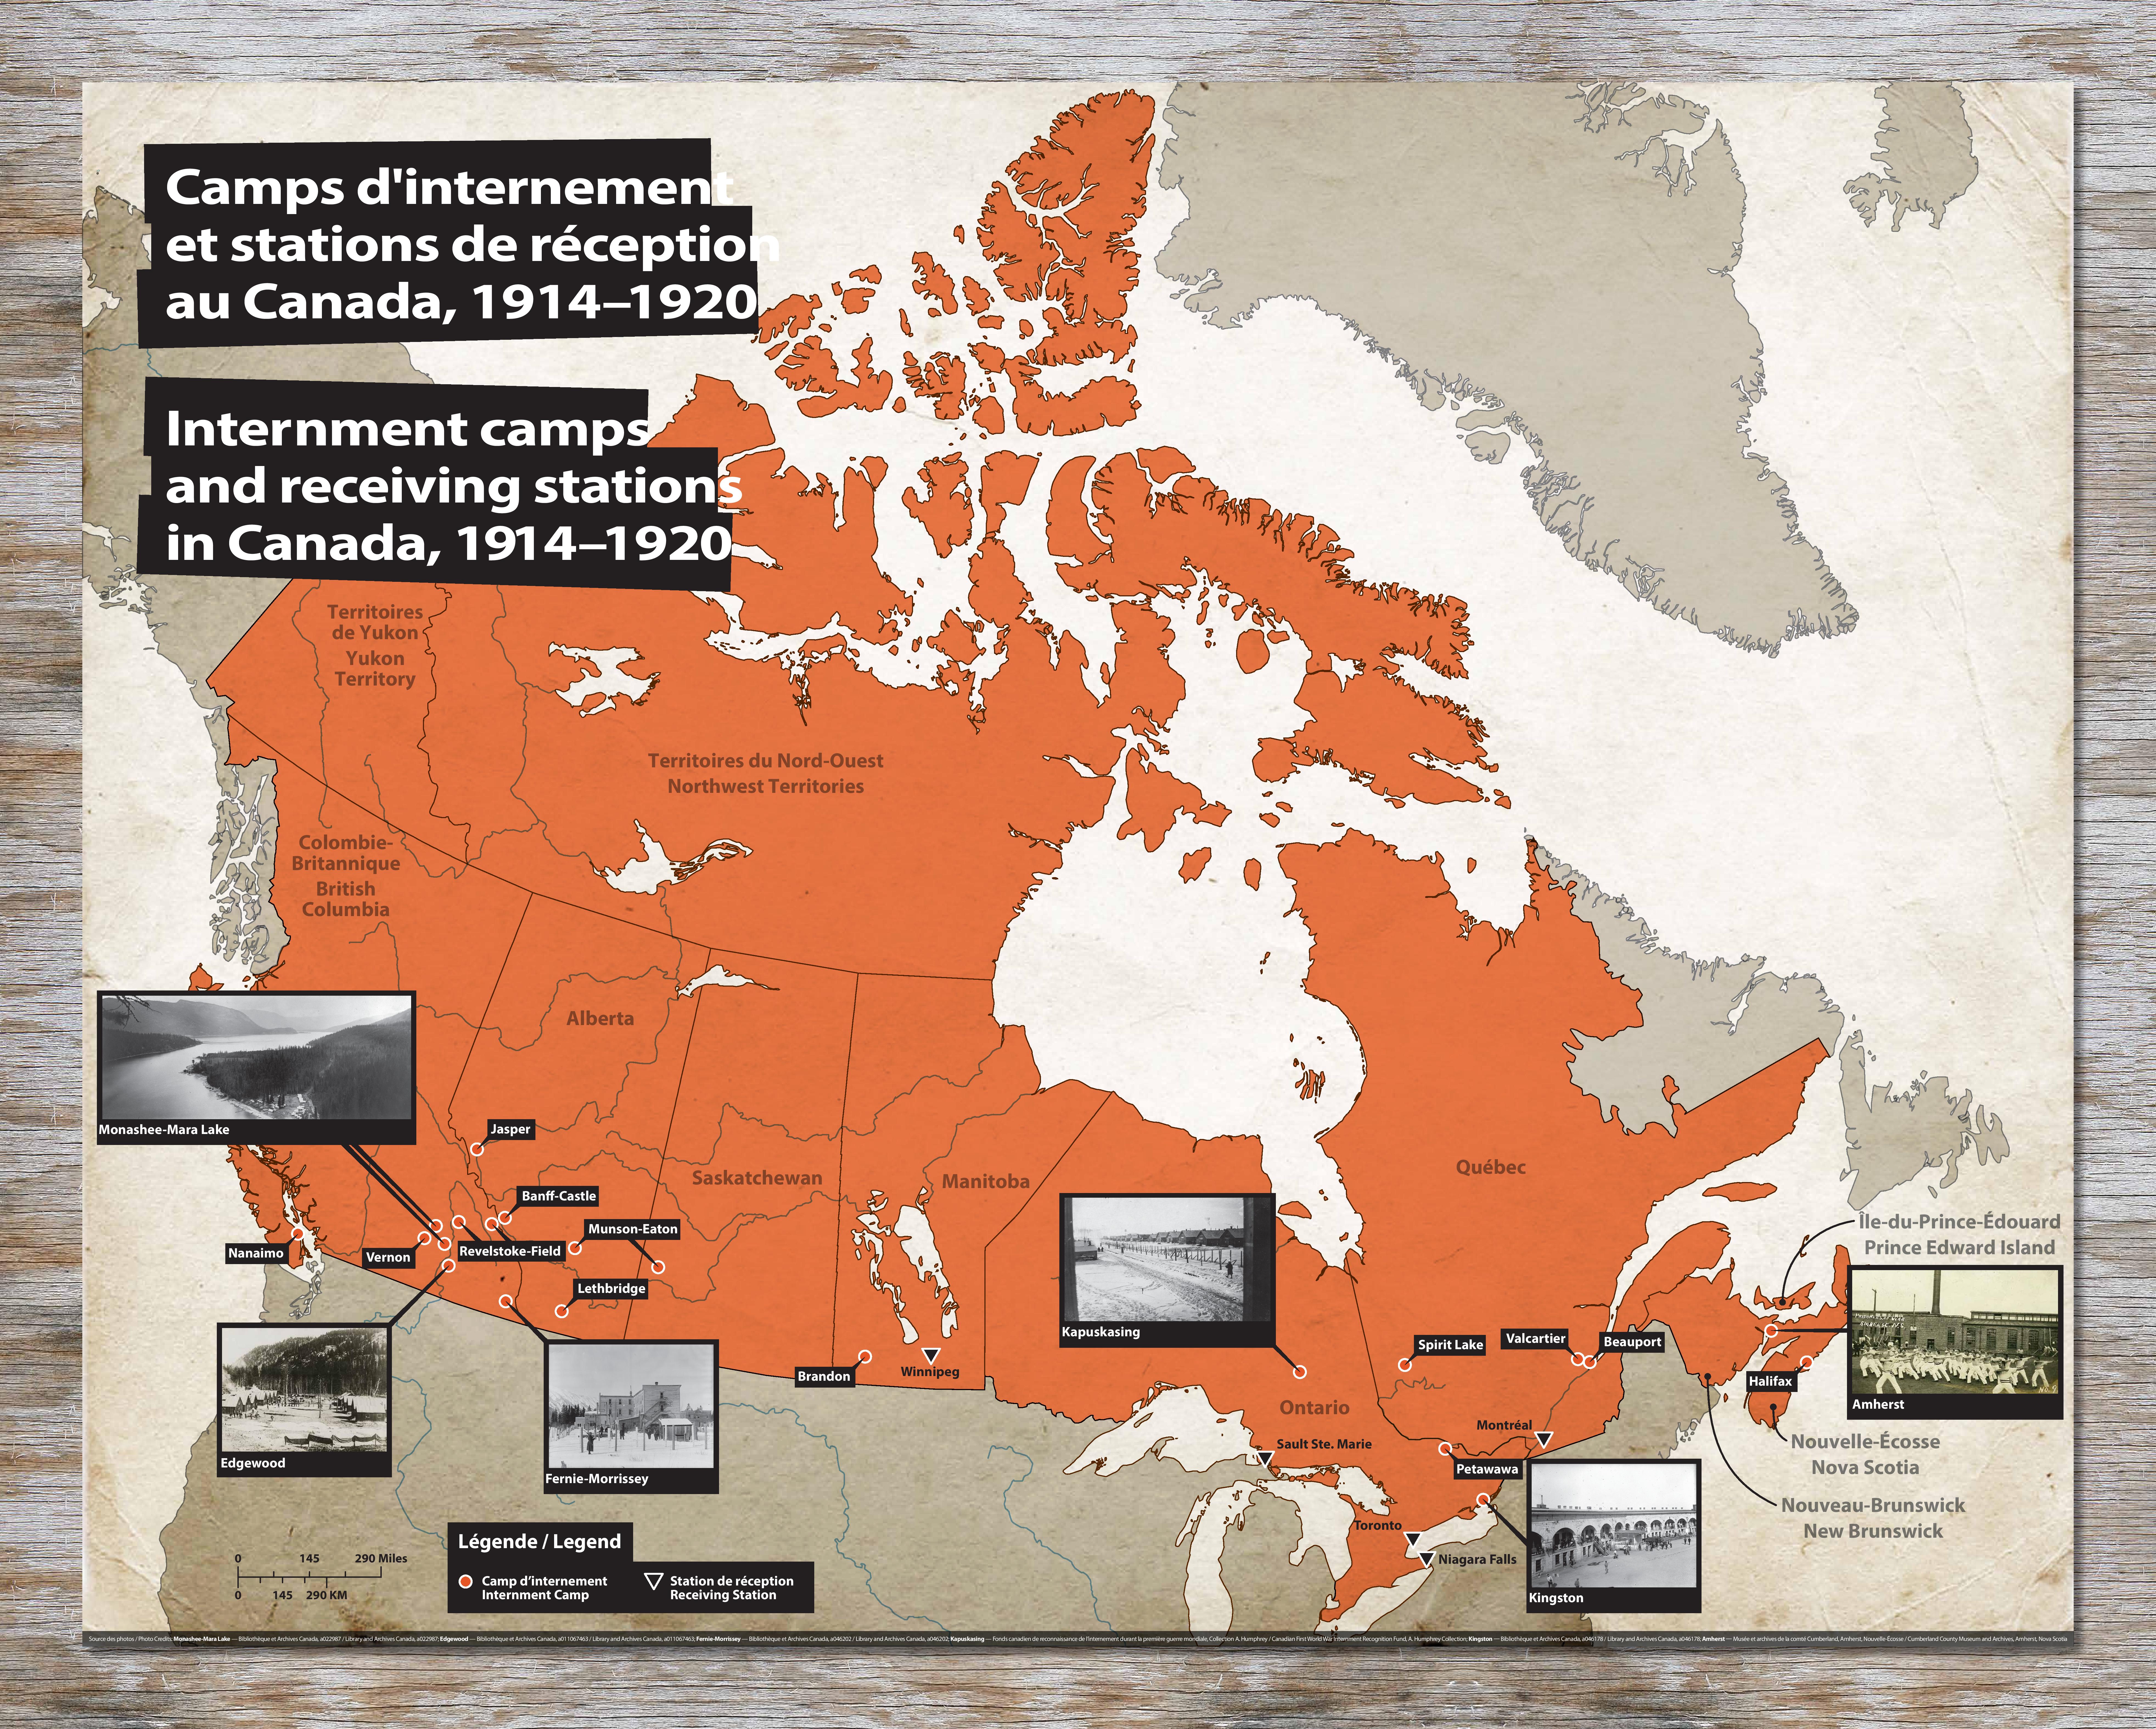 Carte du Canada montrant l’emplacement des camps d’internement pendant la Première Guerre mondiale.//Map of Canada depicting locations of internment camps during the First World War.